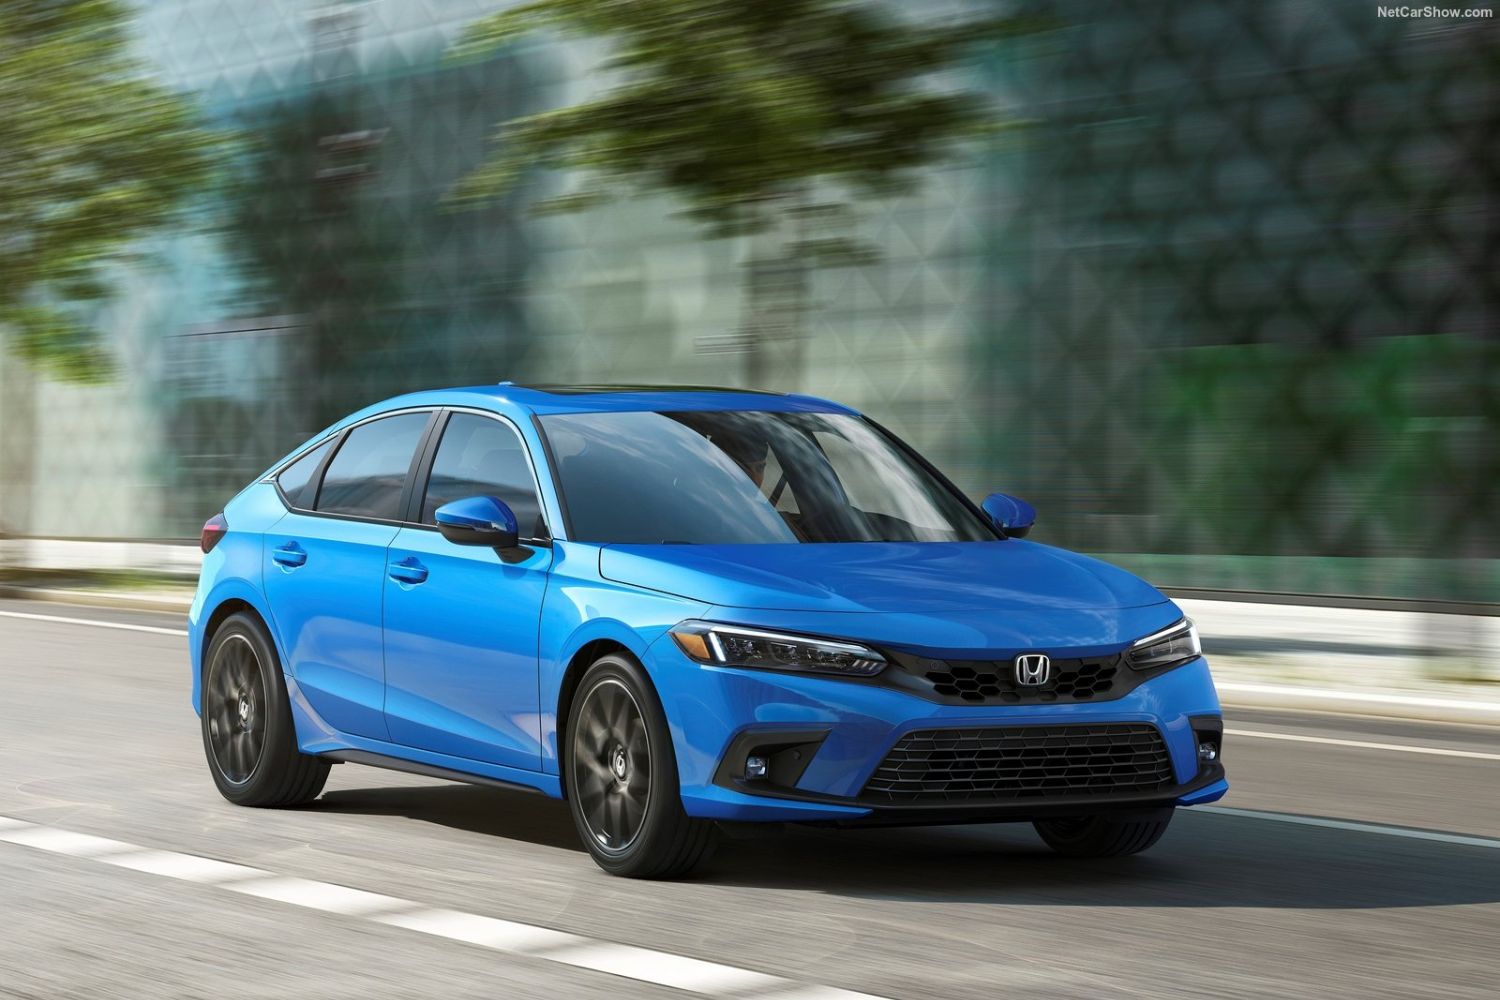 Nieuw! Honda Civic e:HEV 2021-